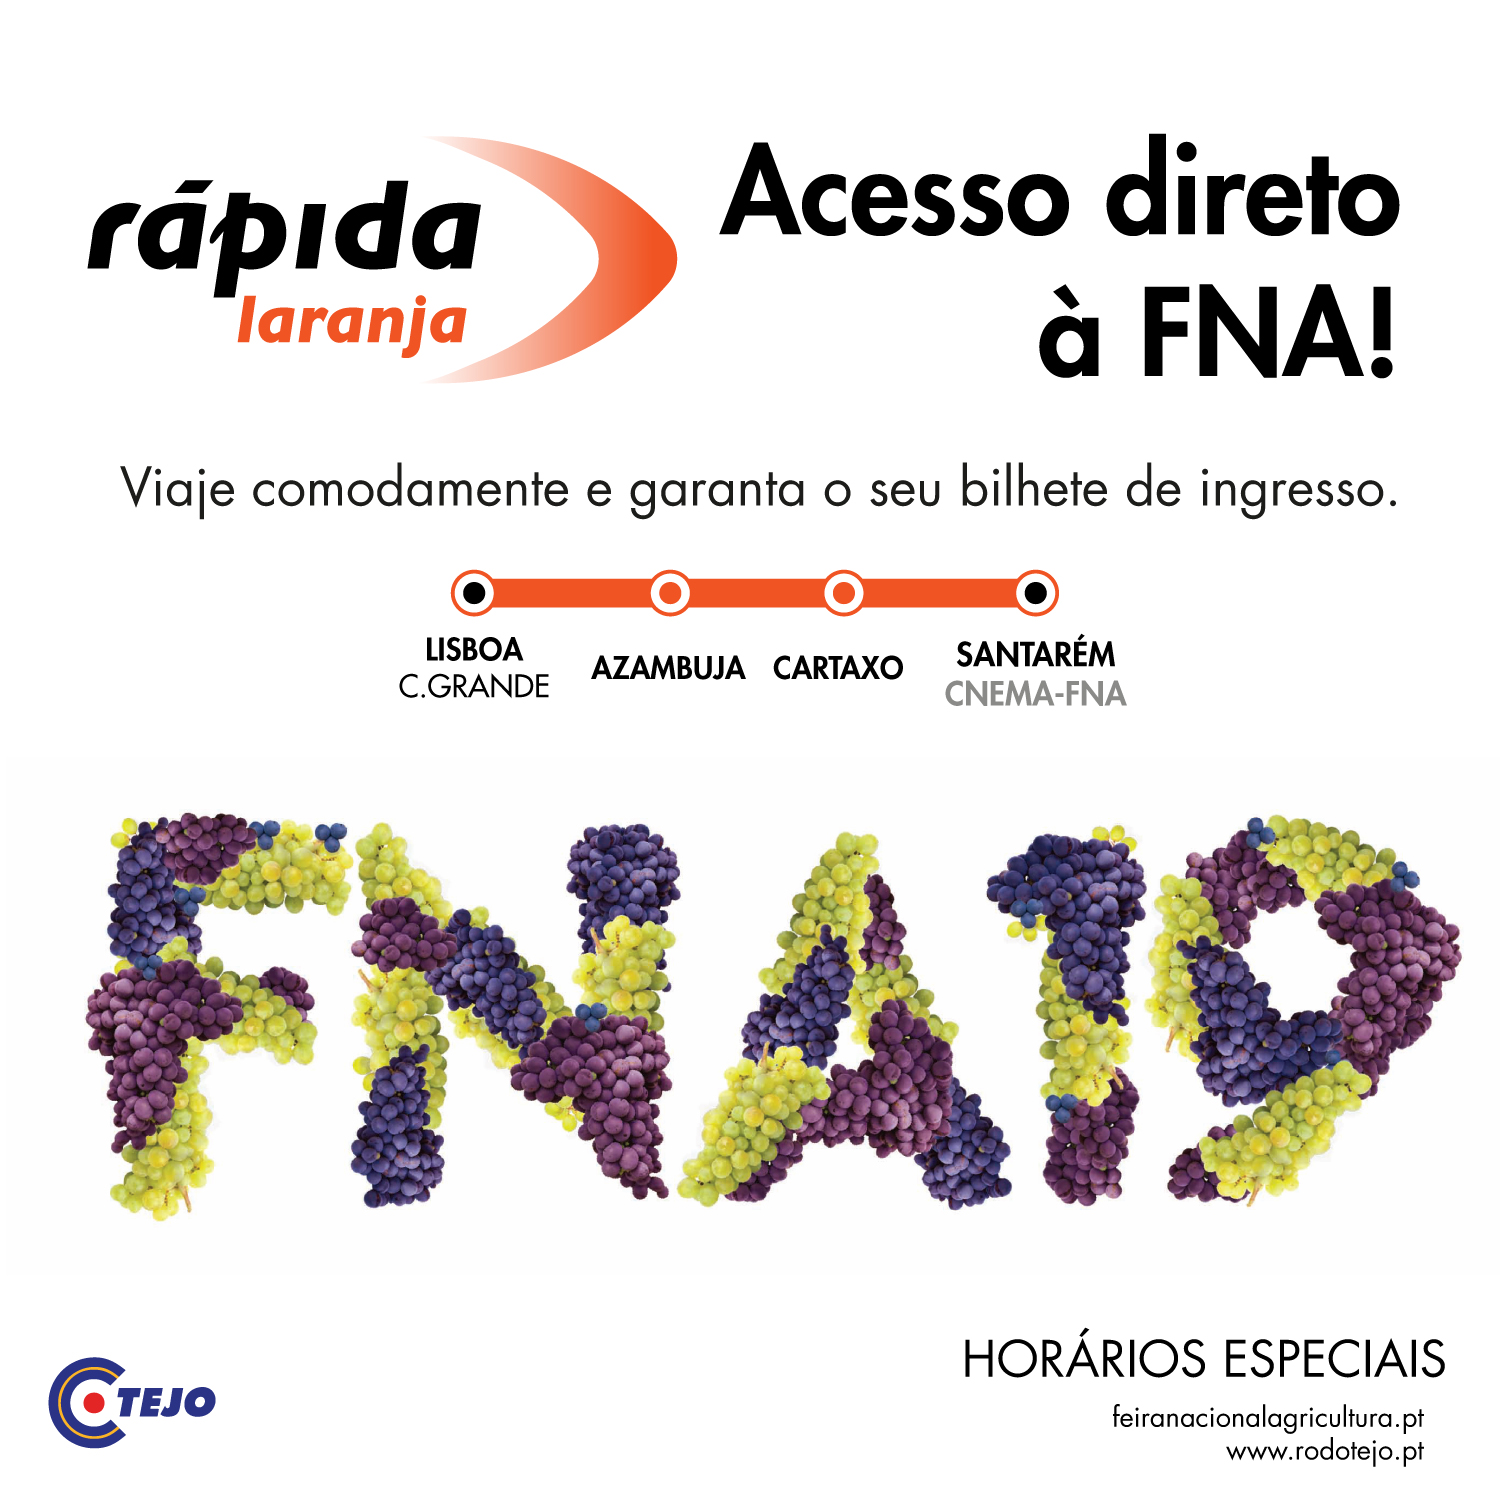 noticia-web-FNA2019_rapida-laranja_2